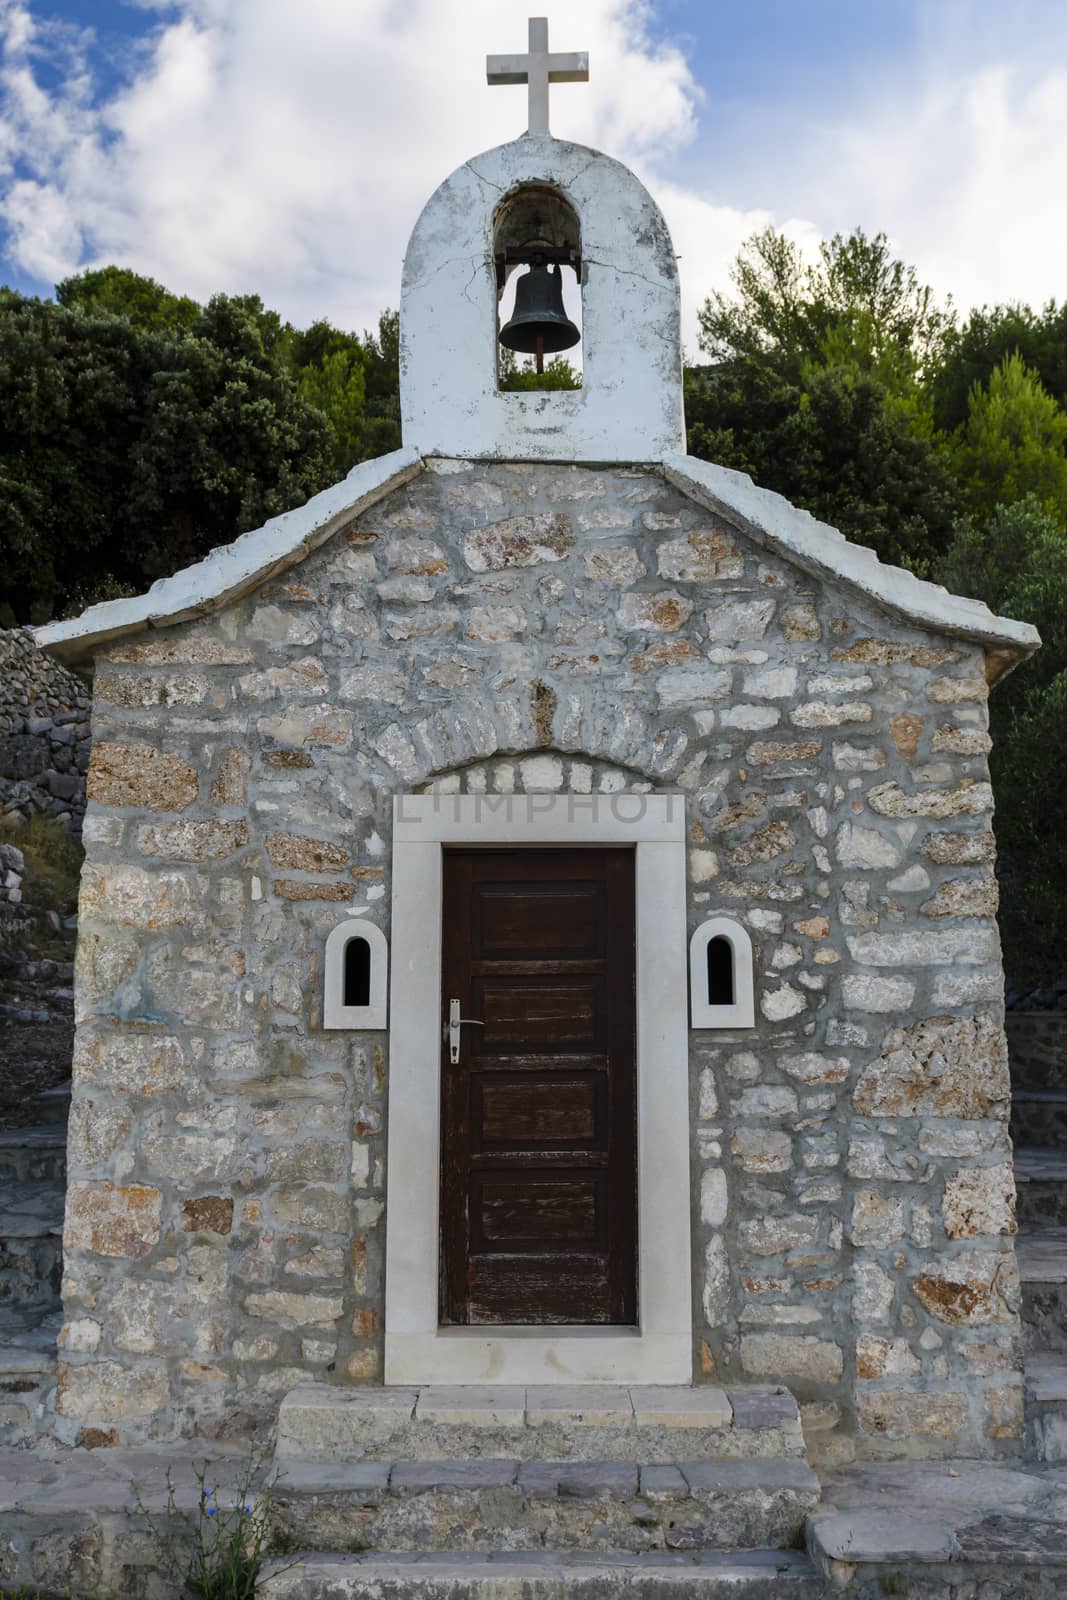 Small stone chappel in the Mediterranean, island of Brac, Croati by asafaric